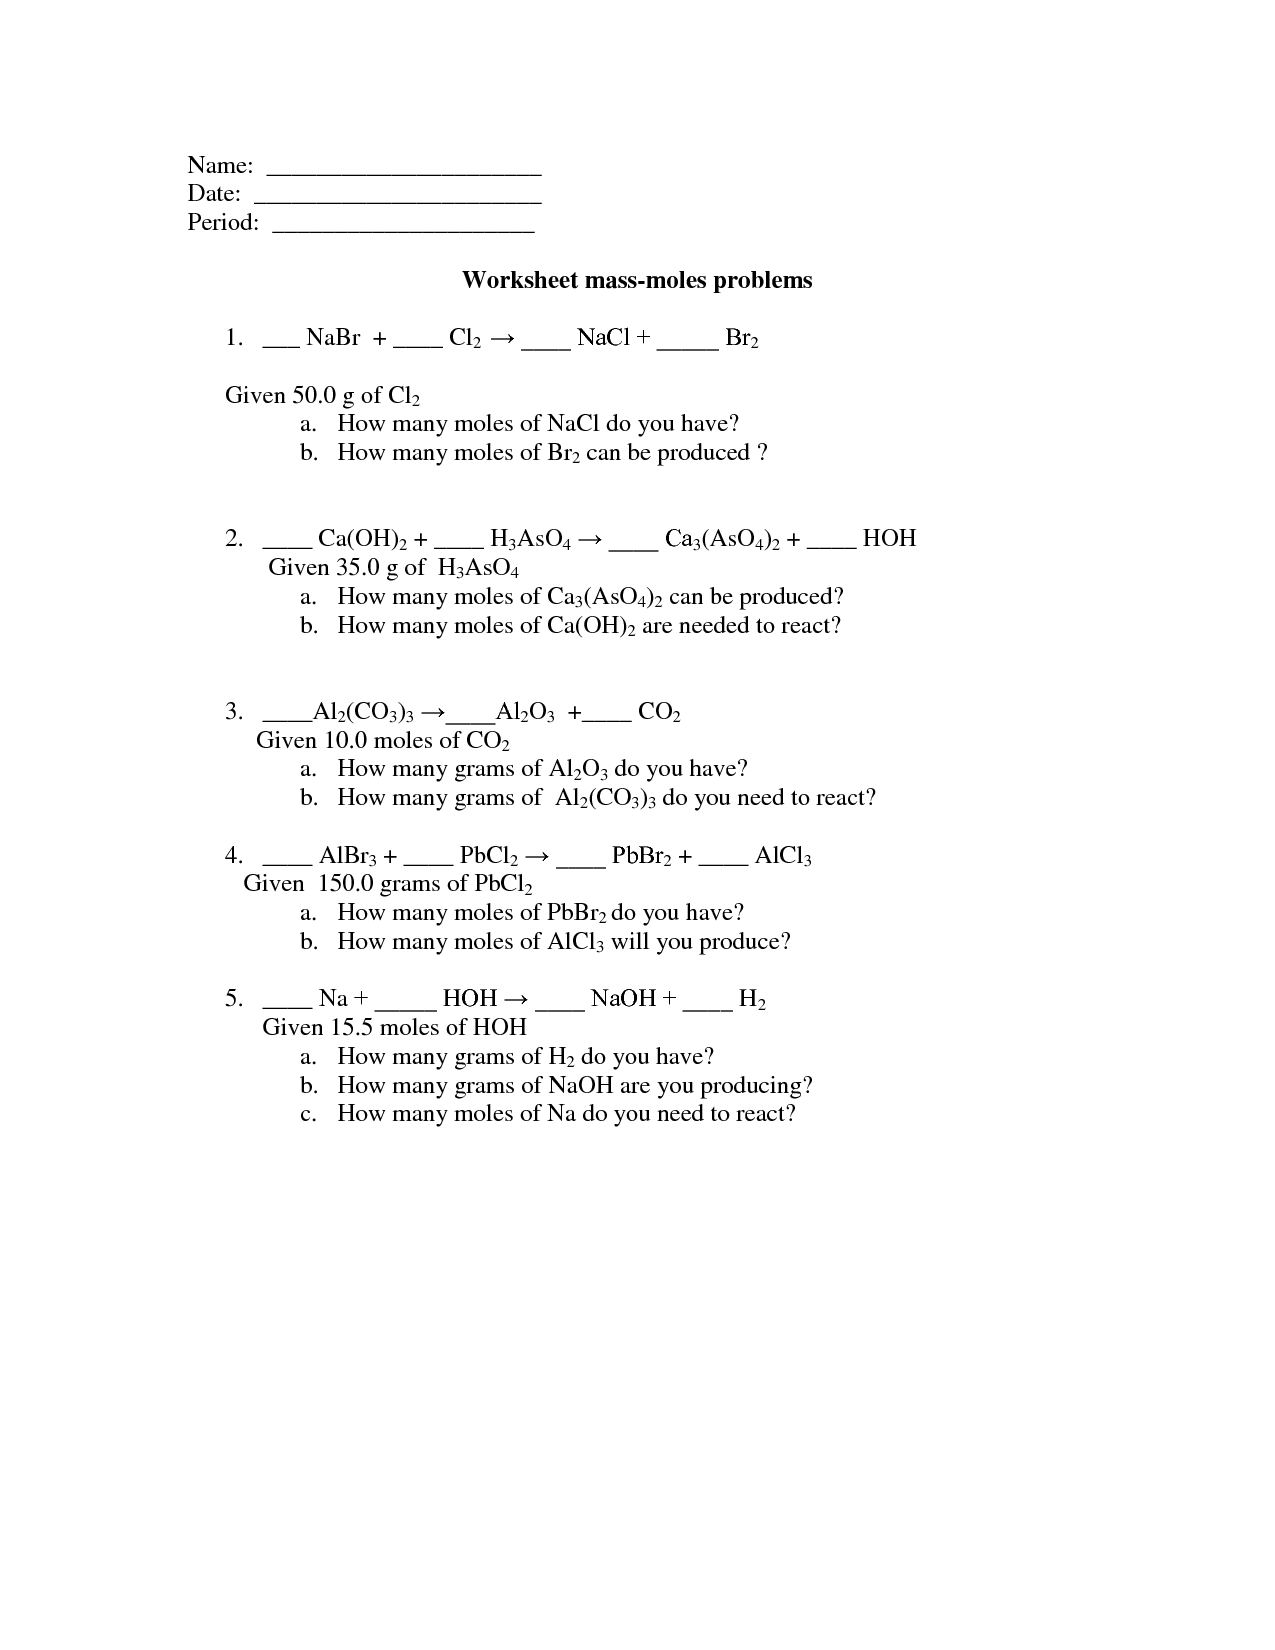 Mole-Mass Problems Worksheet Image